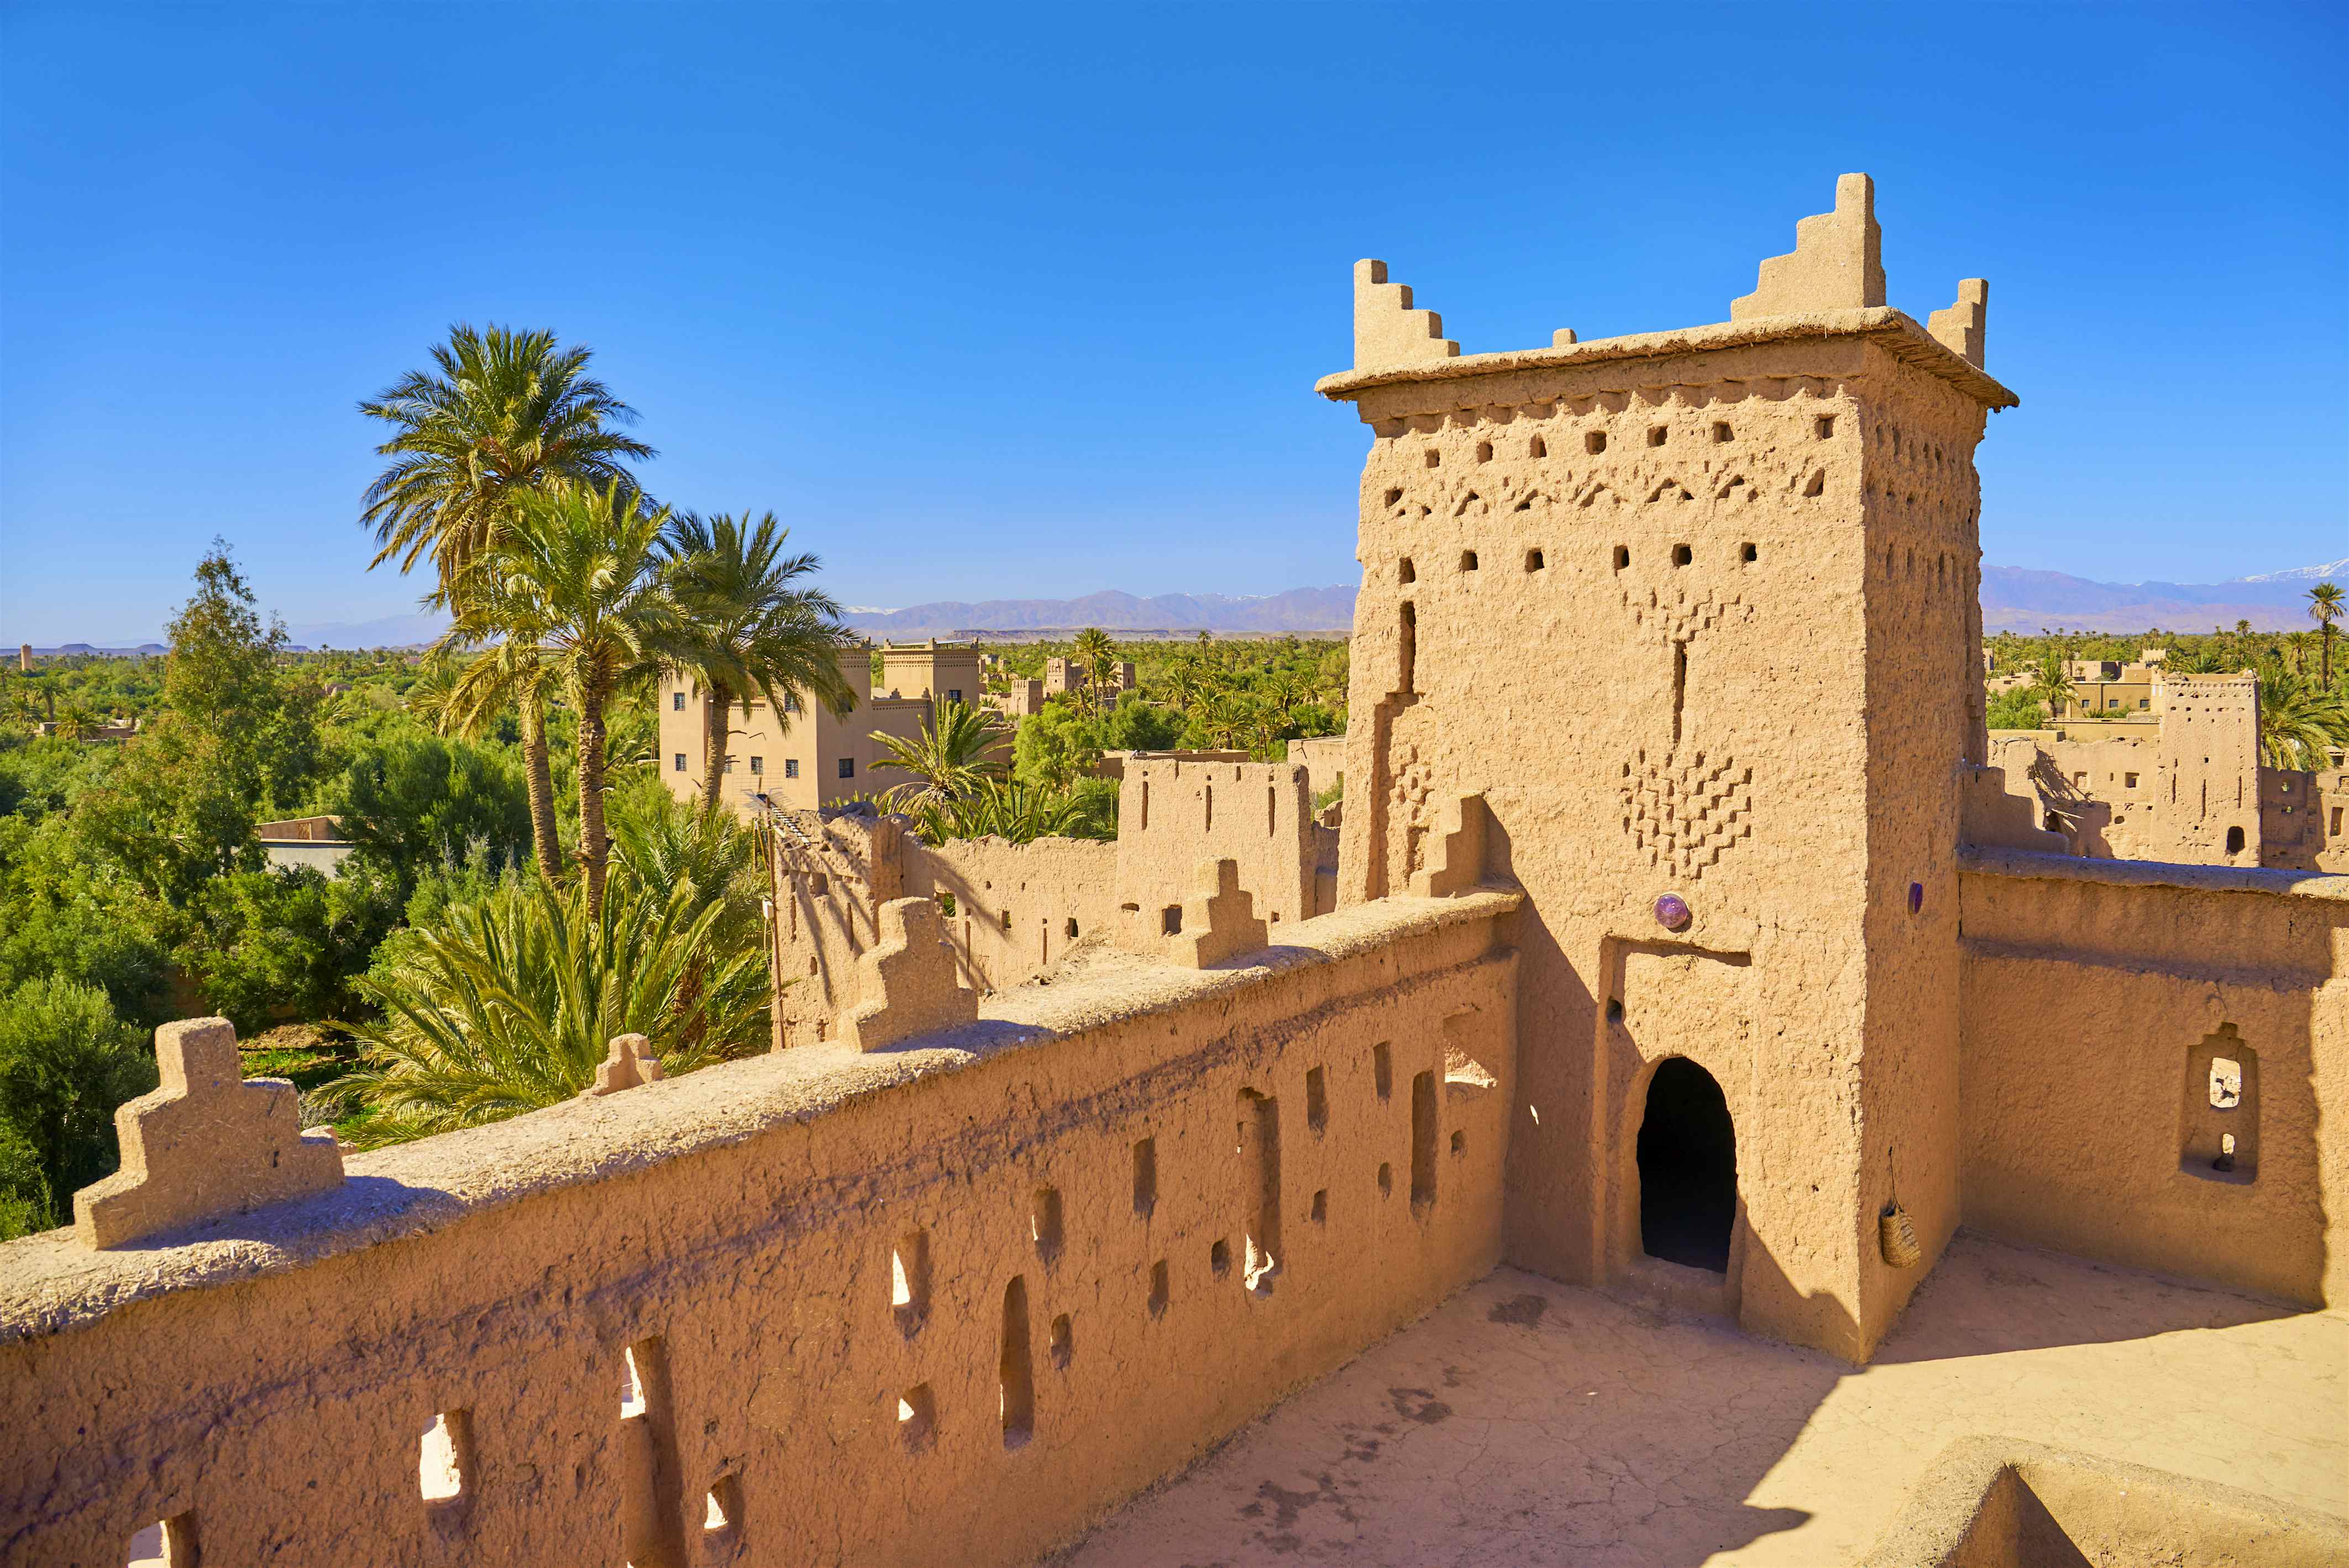 morocco tourism official website